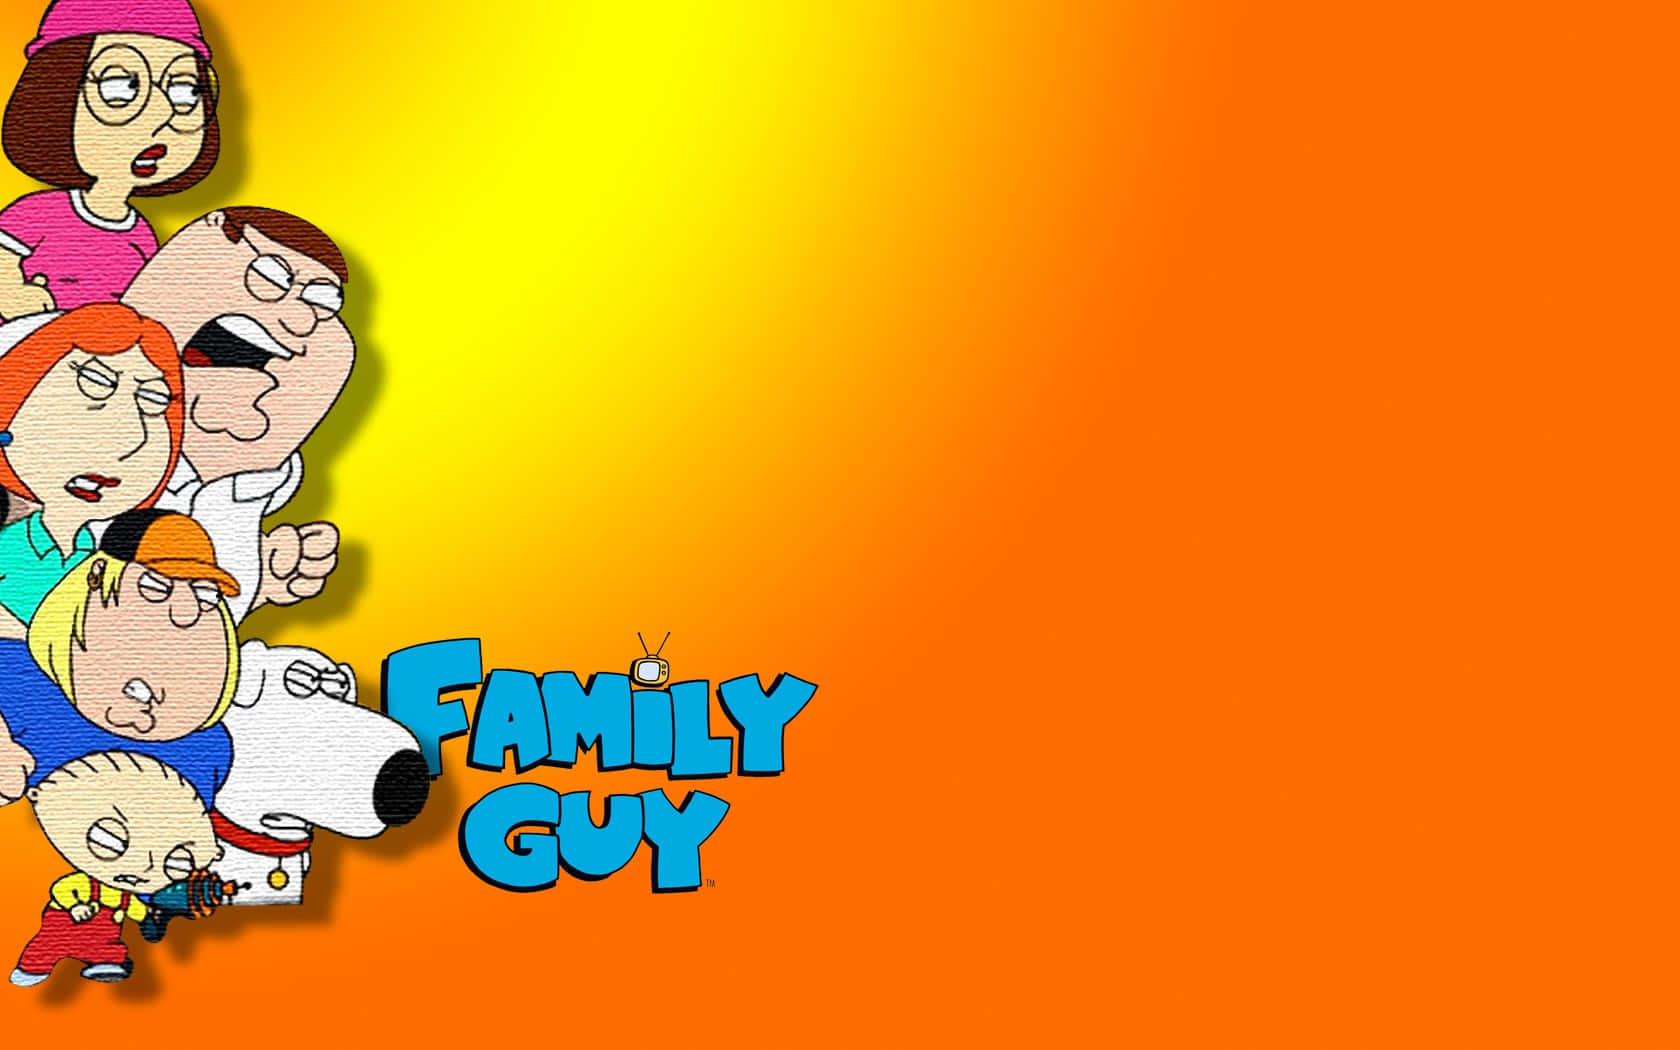 Missainte Den Senaste Avsnittet Av Family Guy På Söndagkvällen.